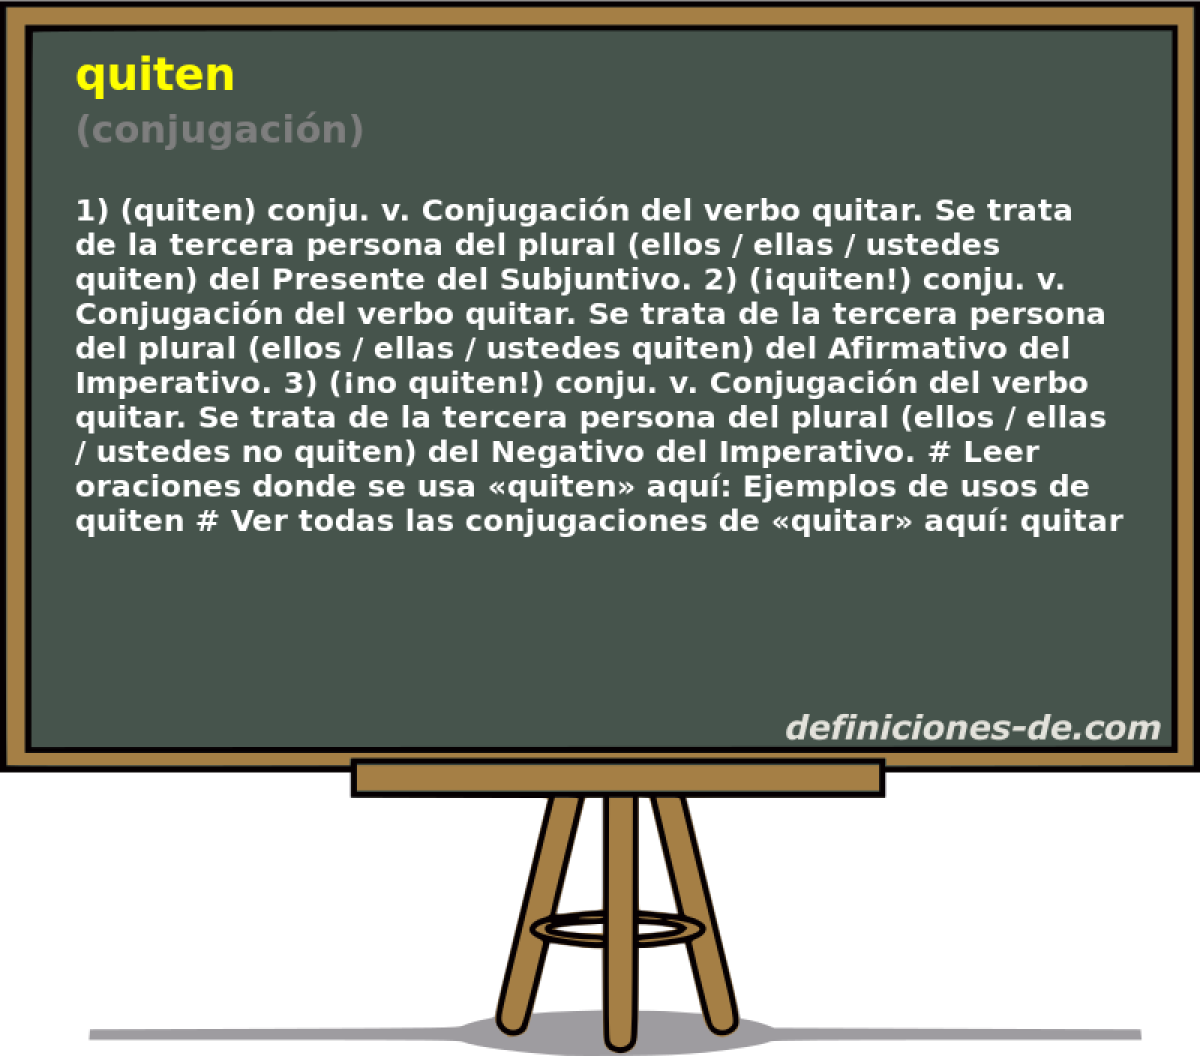 quiten (conjugacin)